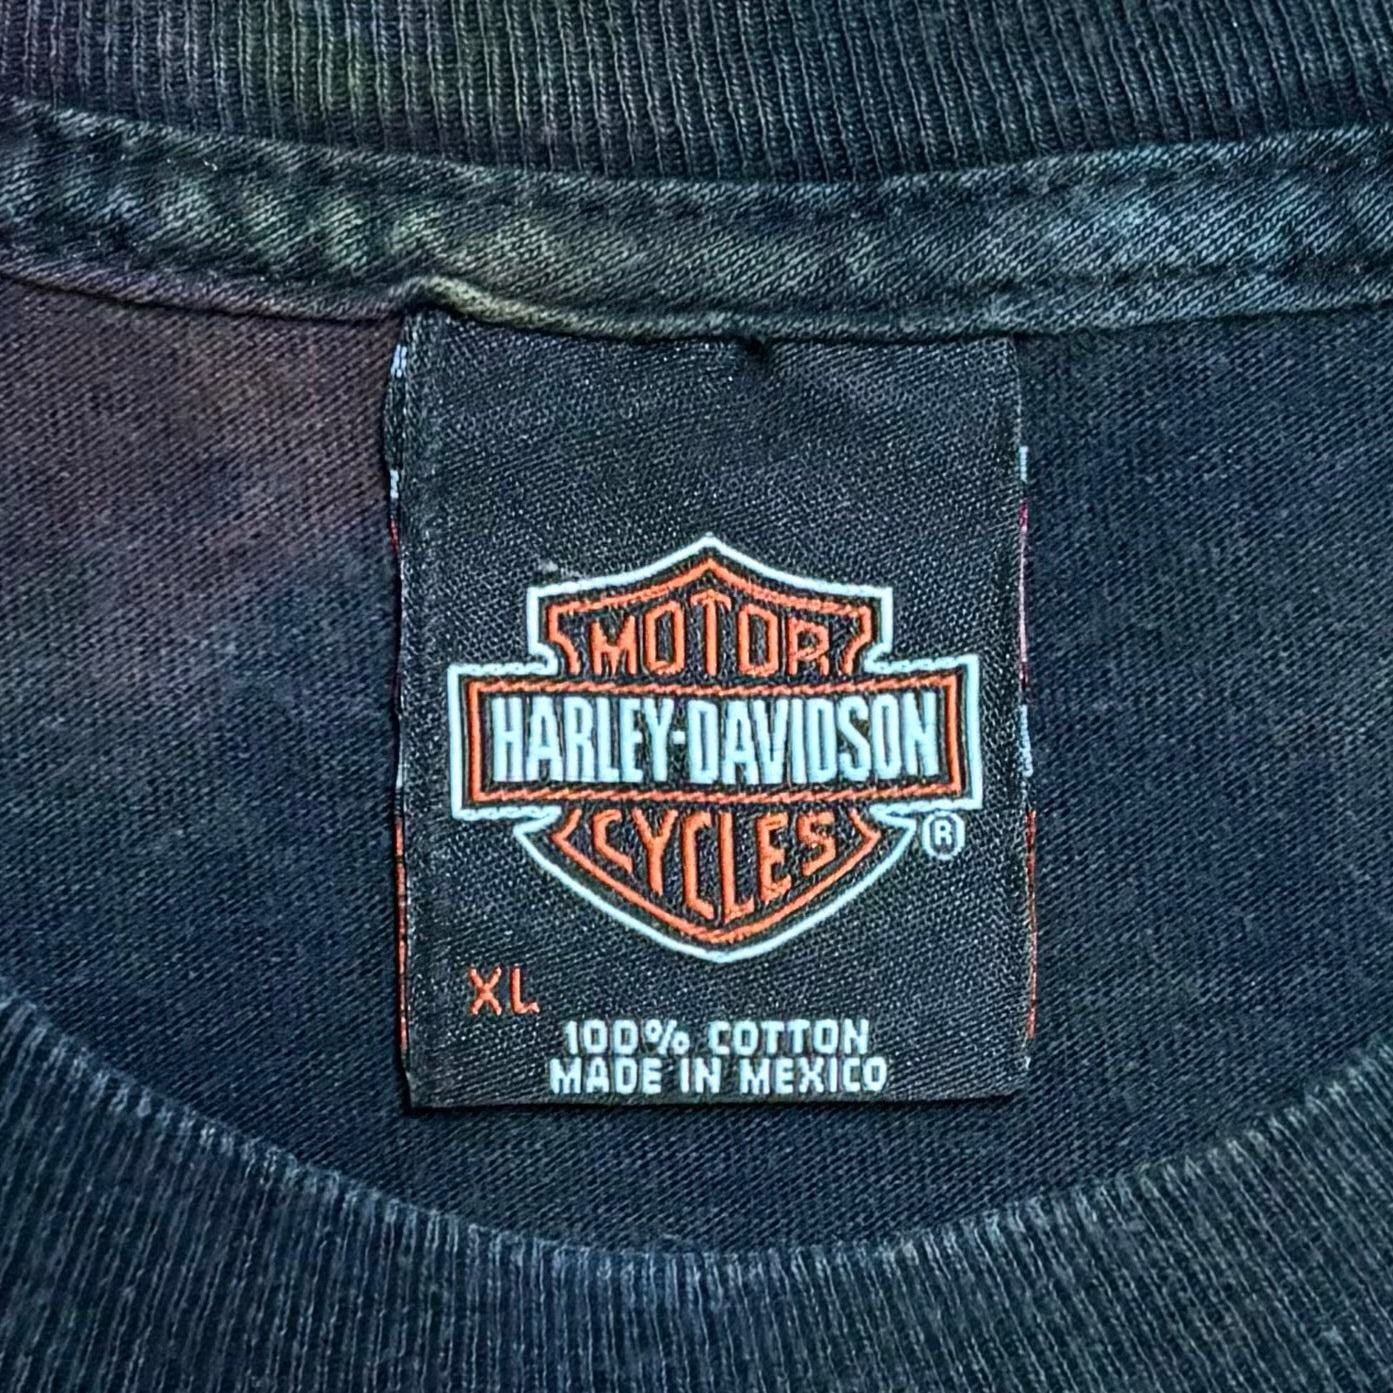 "Harley-Davidson" design t-shirt